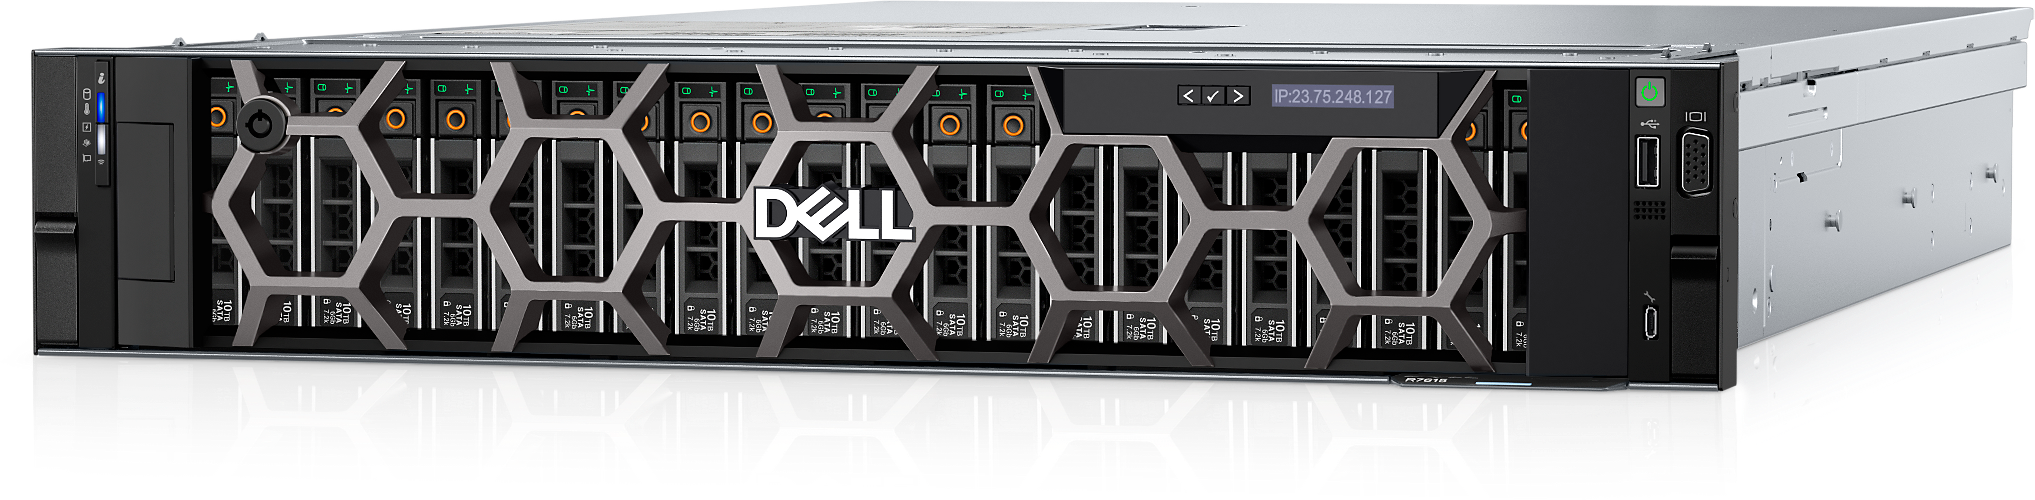 PowerEdge R7615 Rack Server